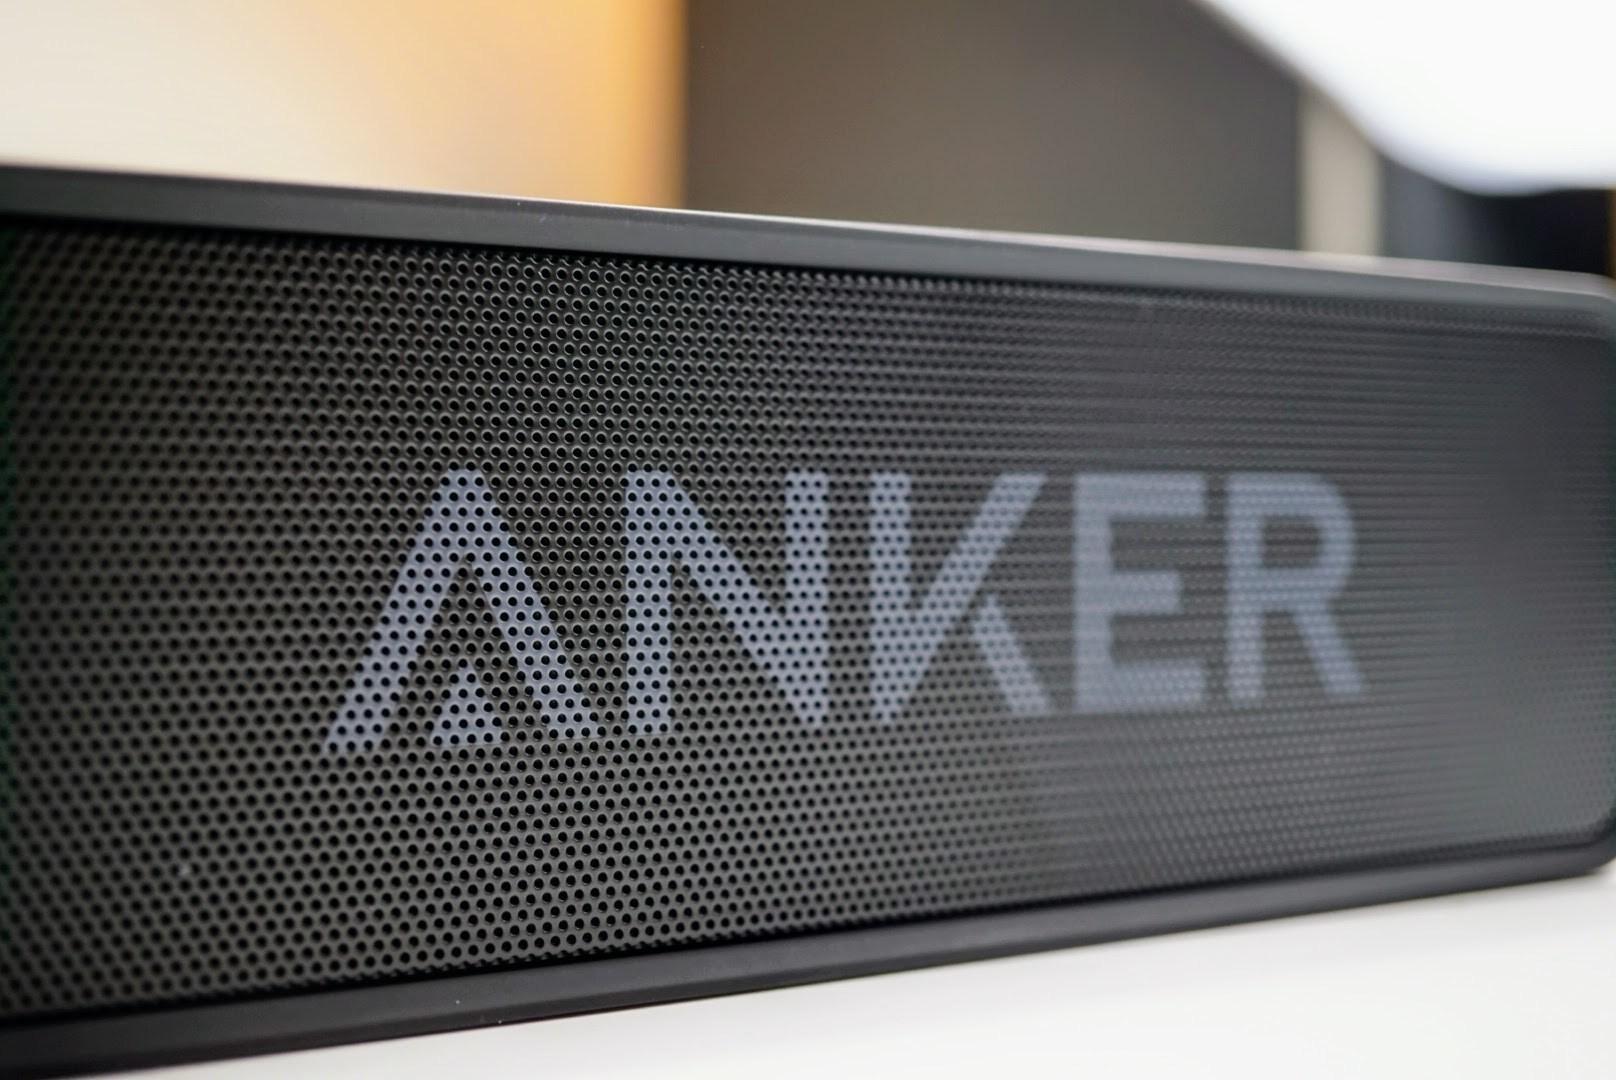 Anker Soundcore Bluetooth speaker: Does it deserve the Best